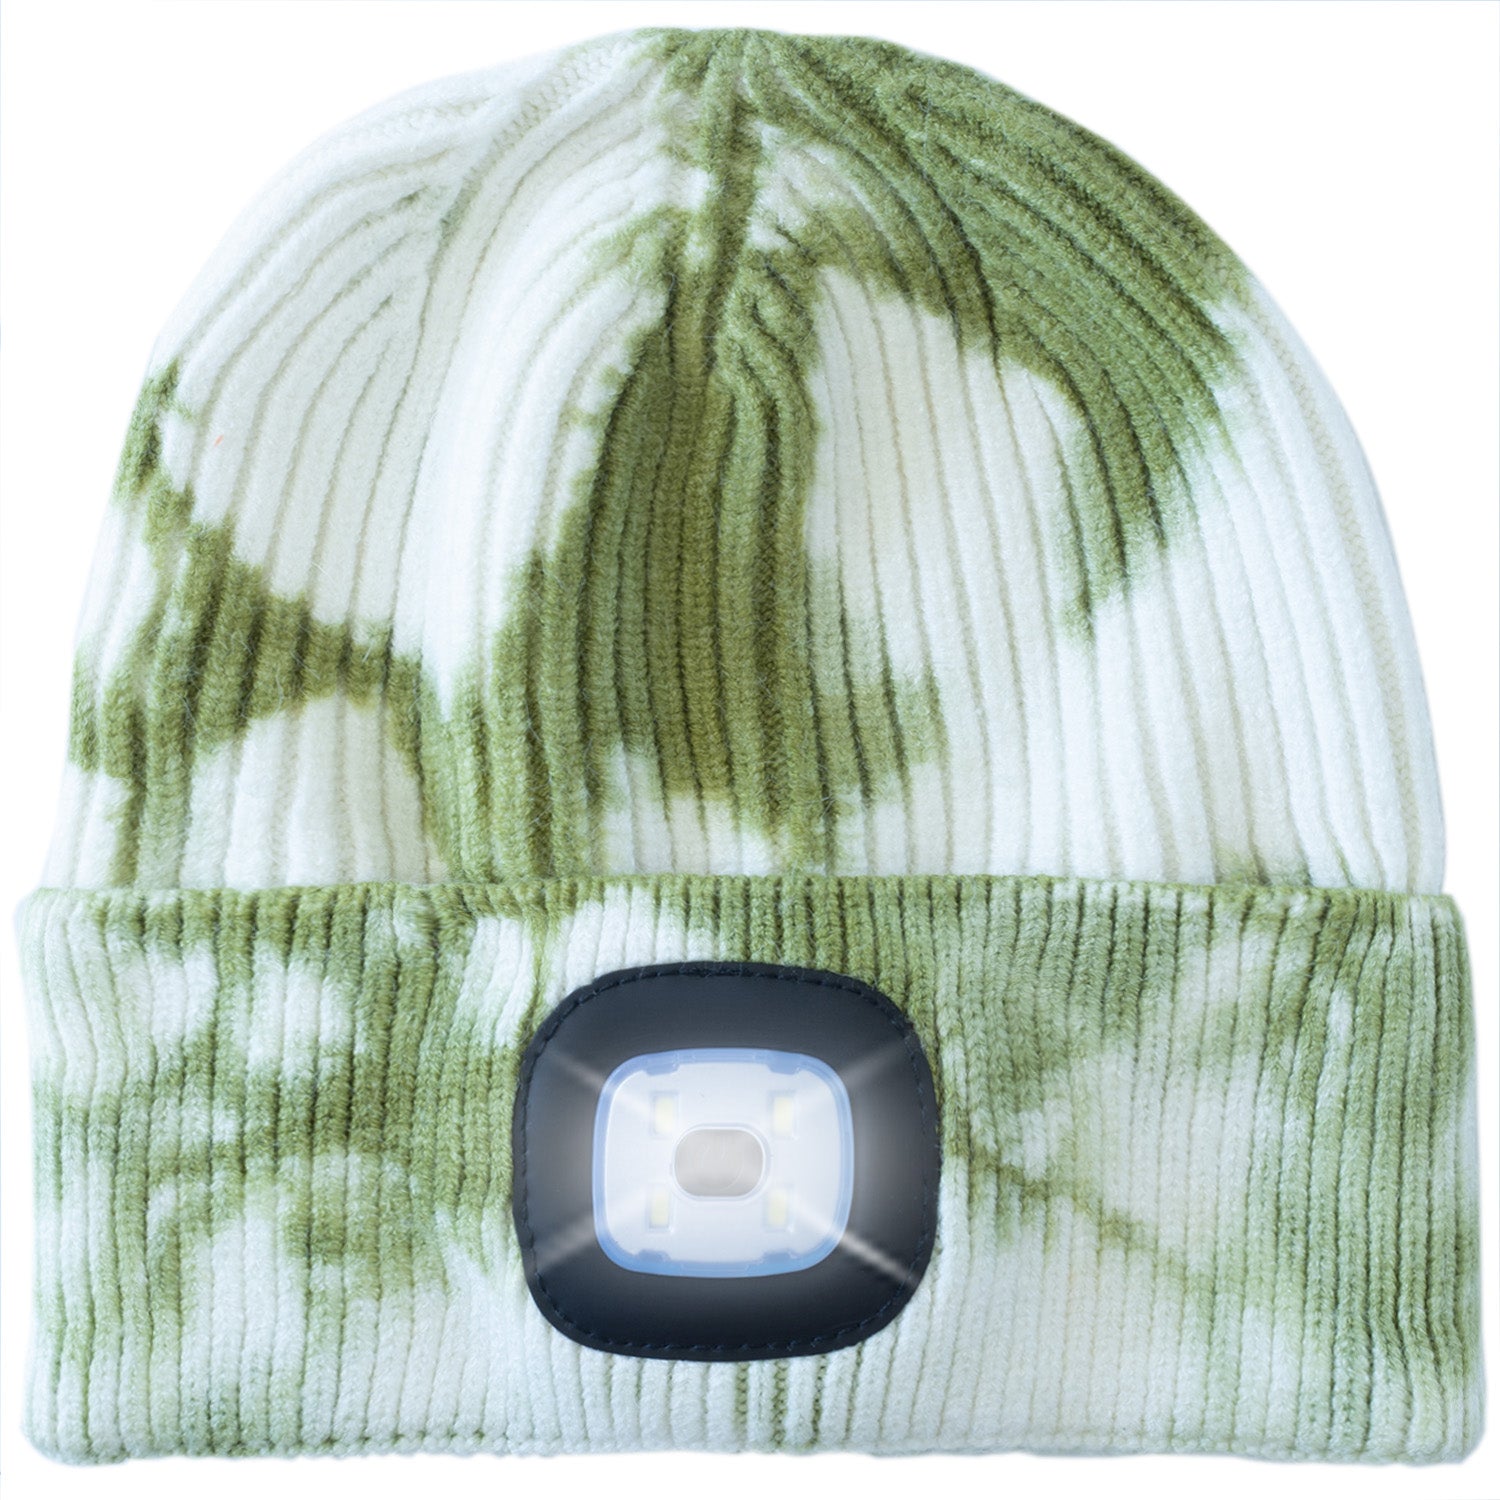 – - Beanie Tie Dye Headlightz® - Roq Knit Green Innovation